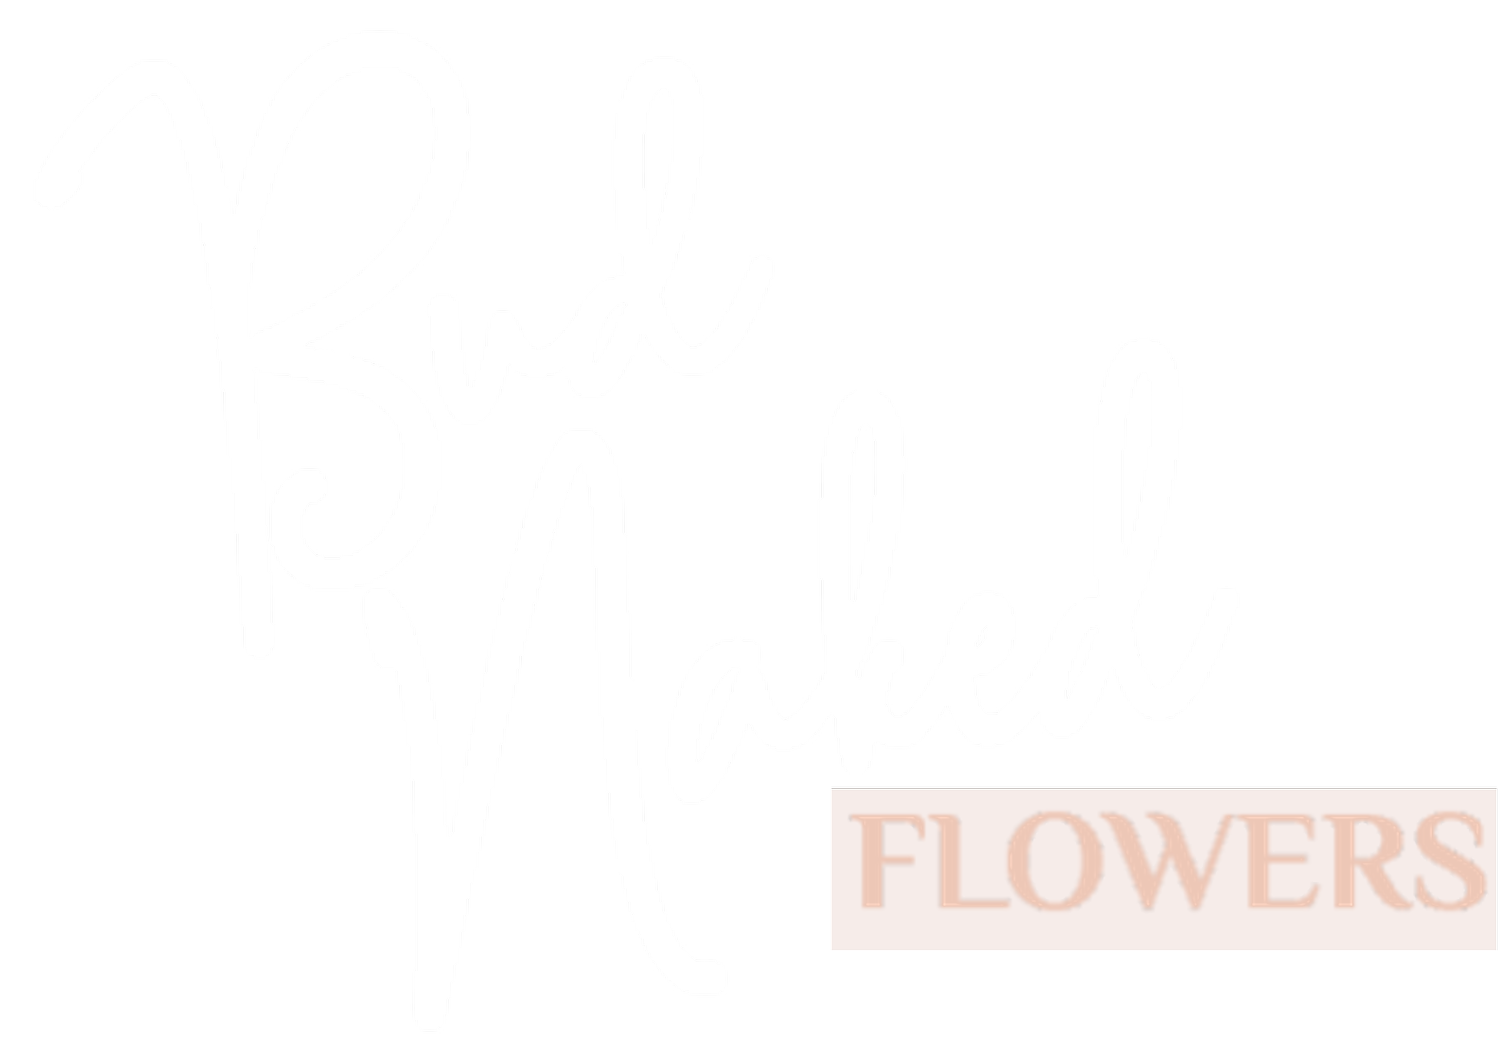 Bud Naked Flowers